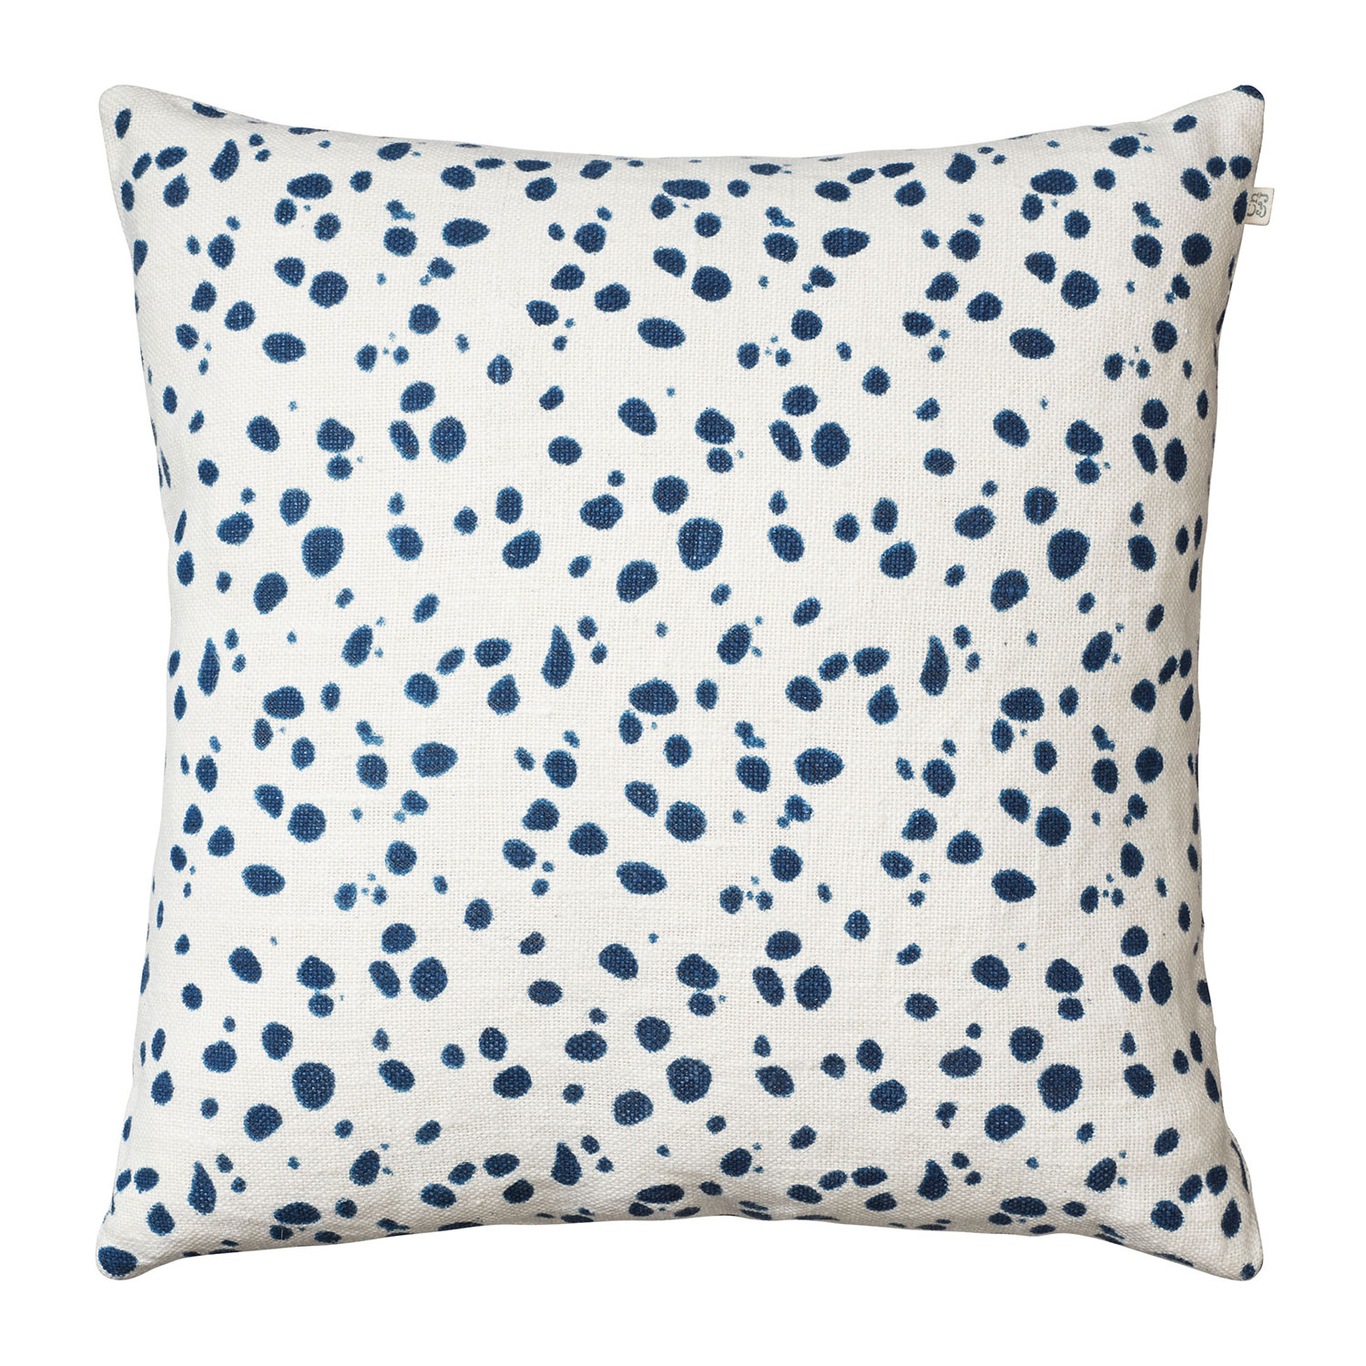 Tiger Dot Cushion Cover 50x50 cm, White/Blue